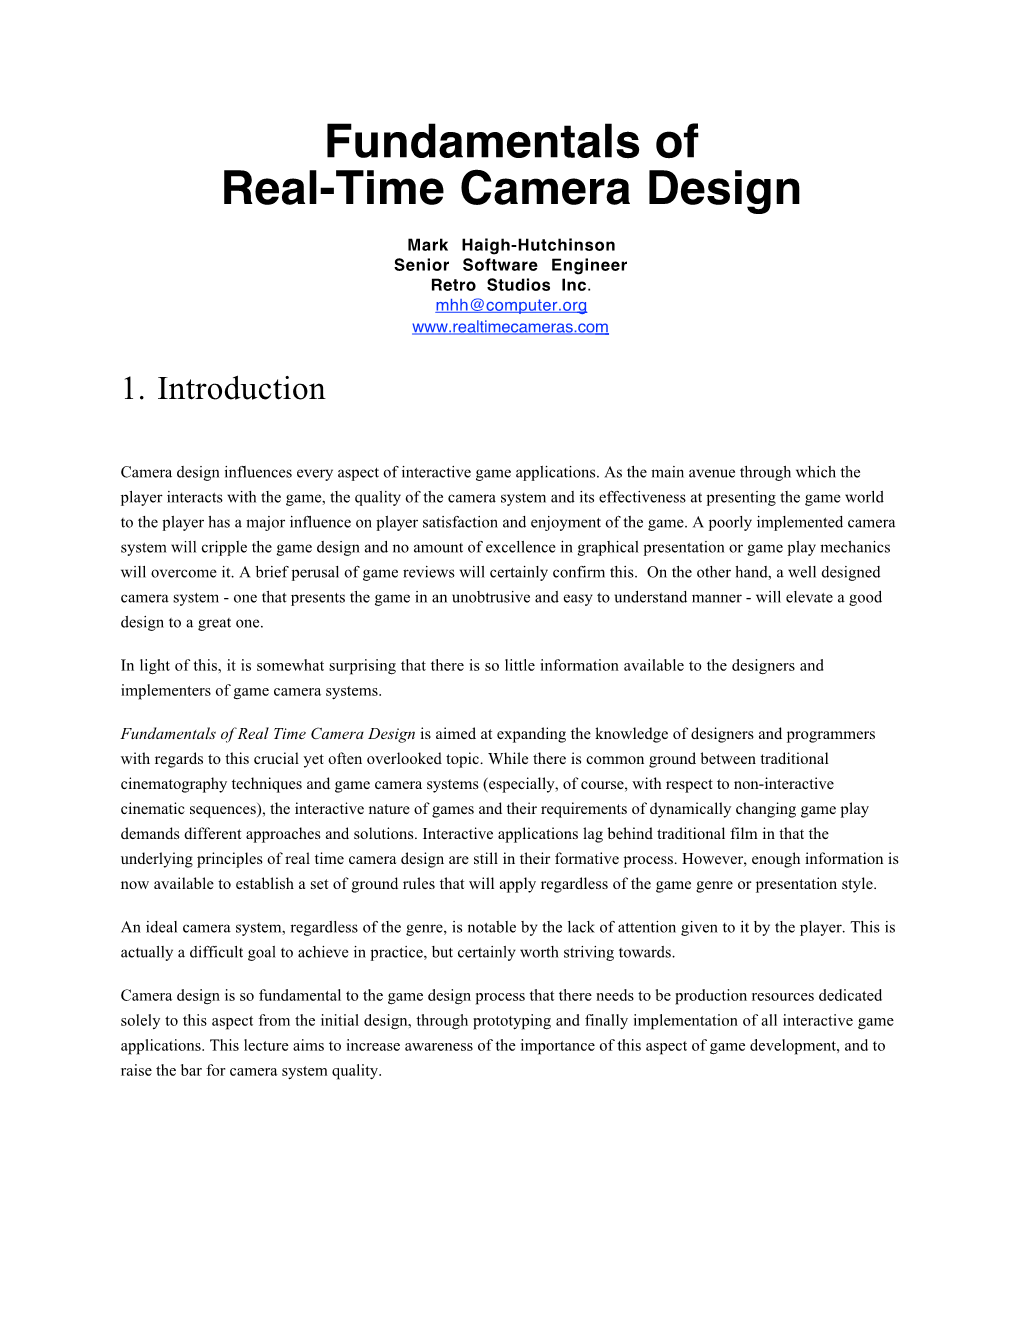 Fundamentals of Real-Time Camera Design